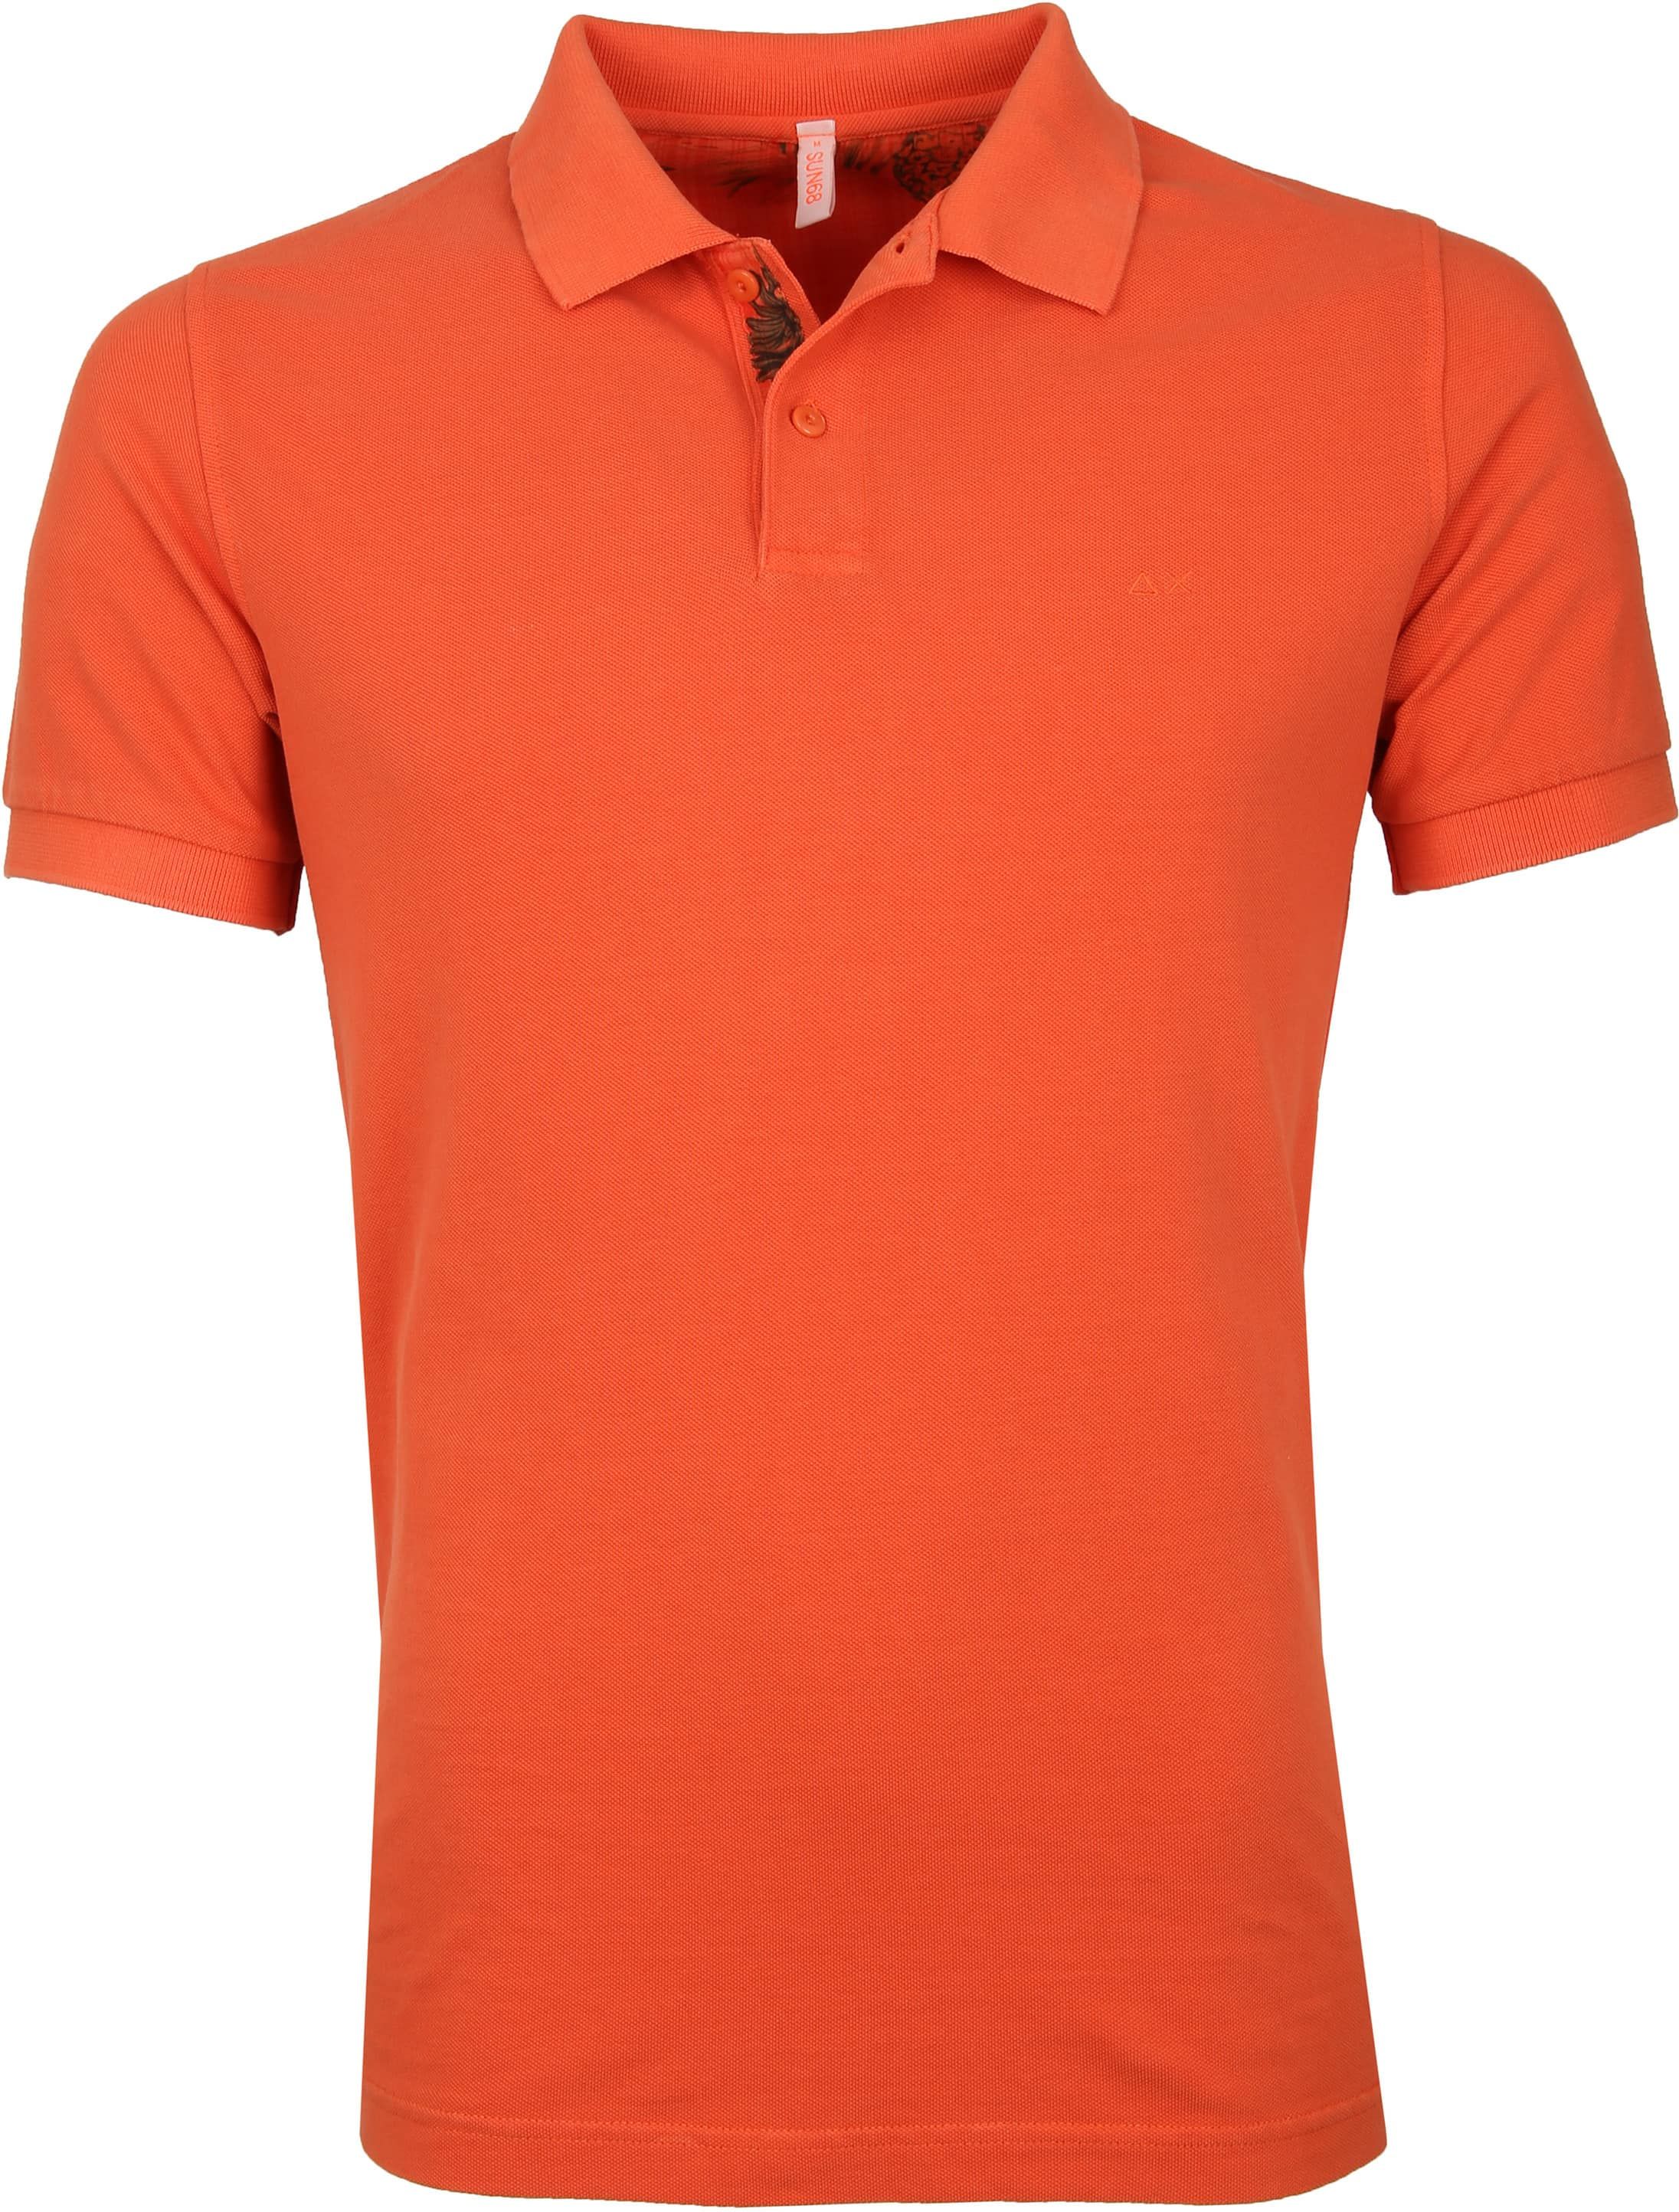 Sun68 Polo Shirt Cold Orange size L